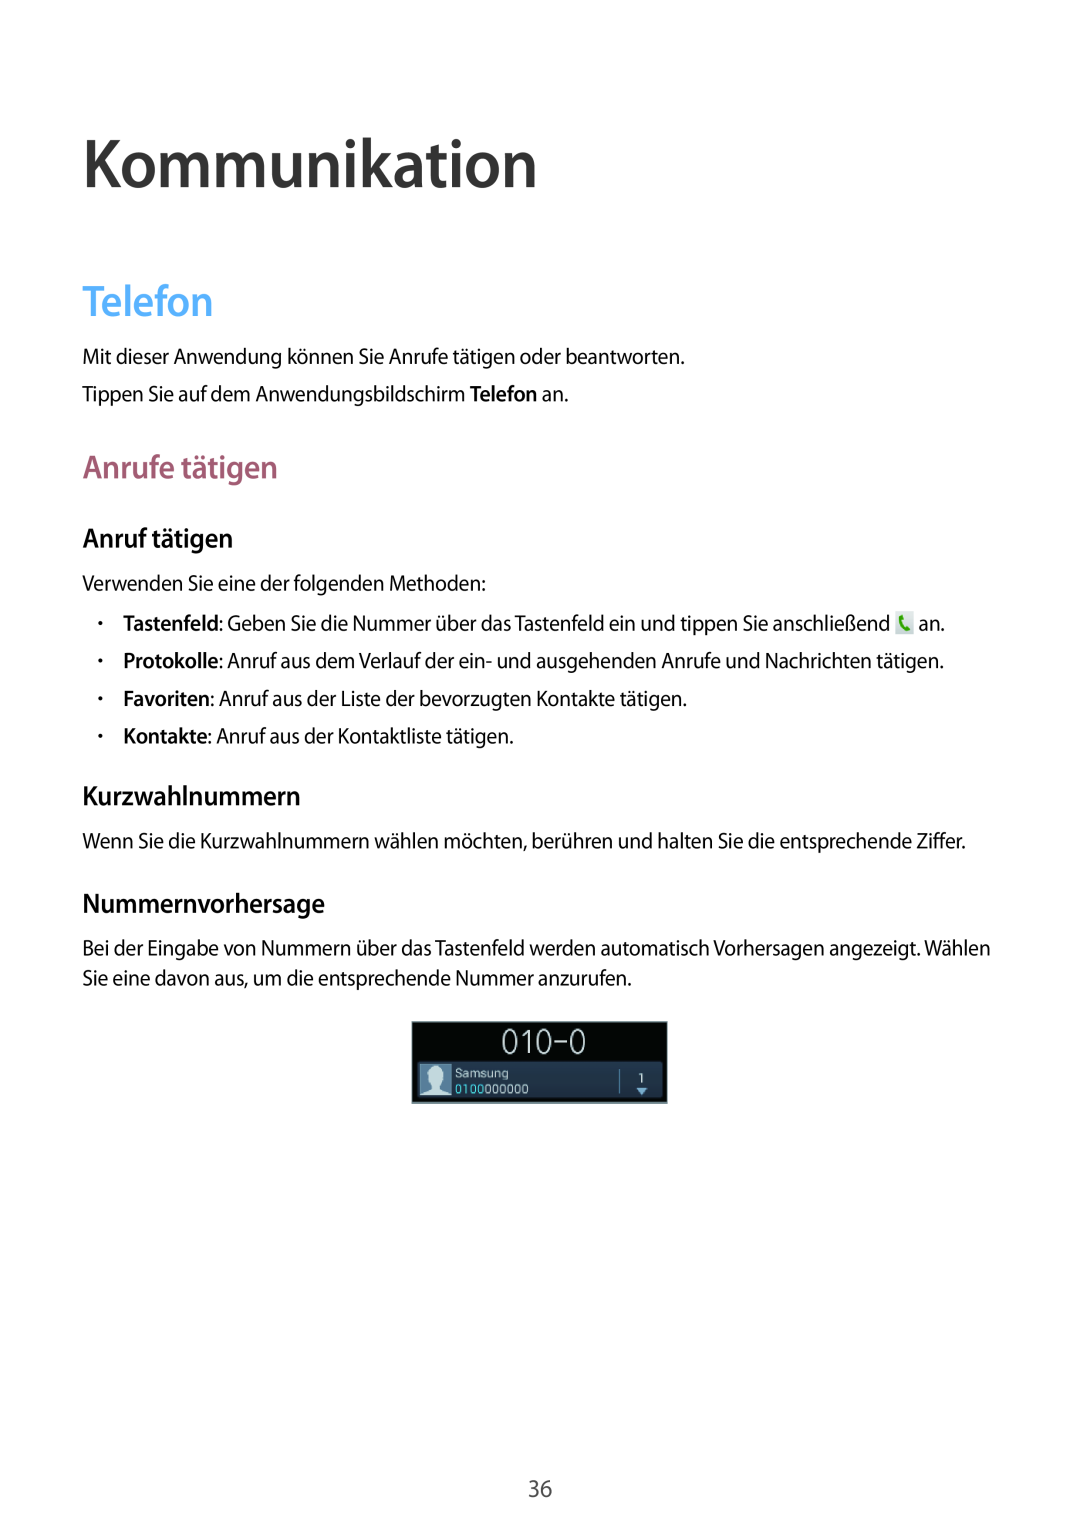 Samsung GT2S5280LKADBT manual Kommunikation, Telefon, Anrufe tätigen, Anruf tätigen, Kurzwahlnummern, Nummernvorhersage 